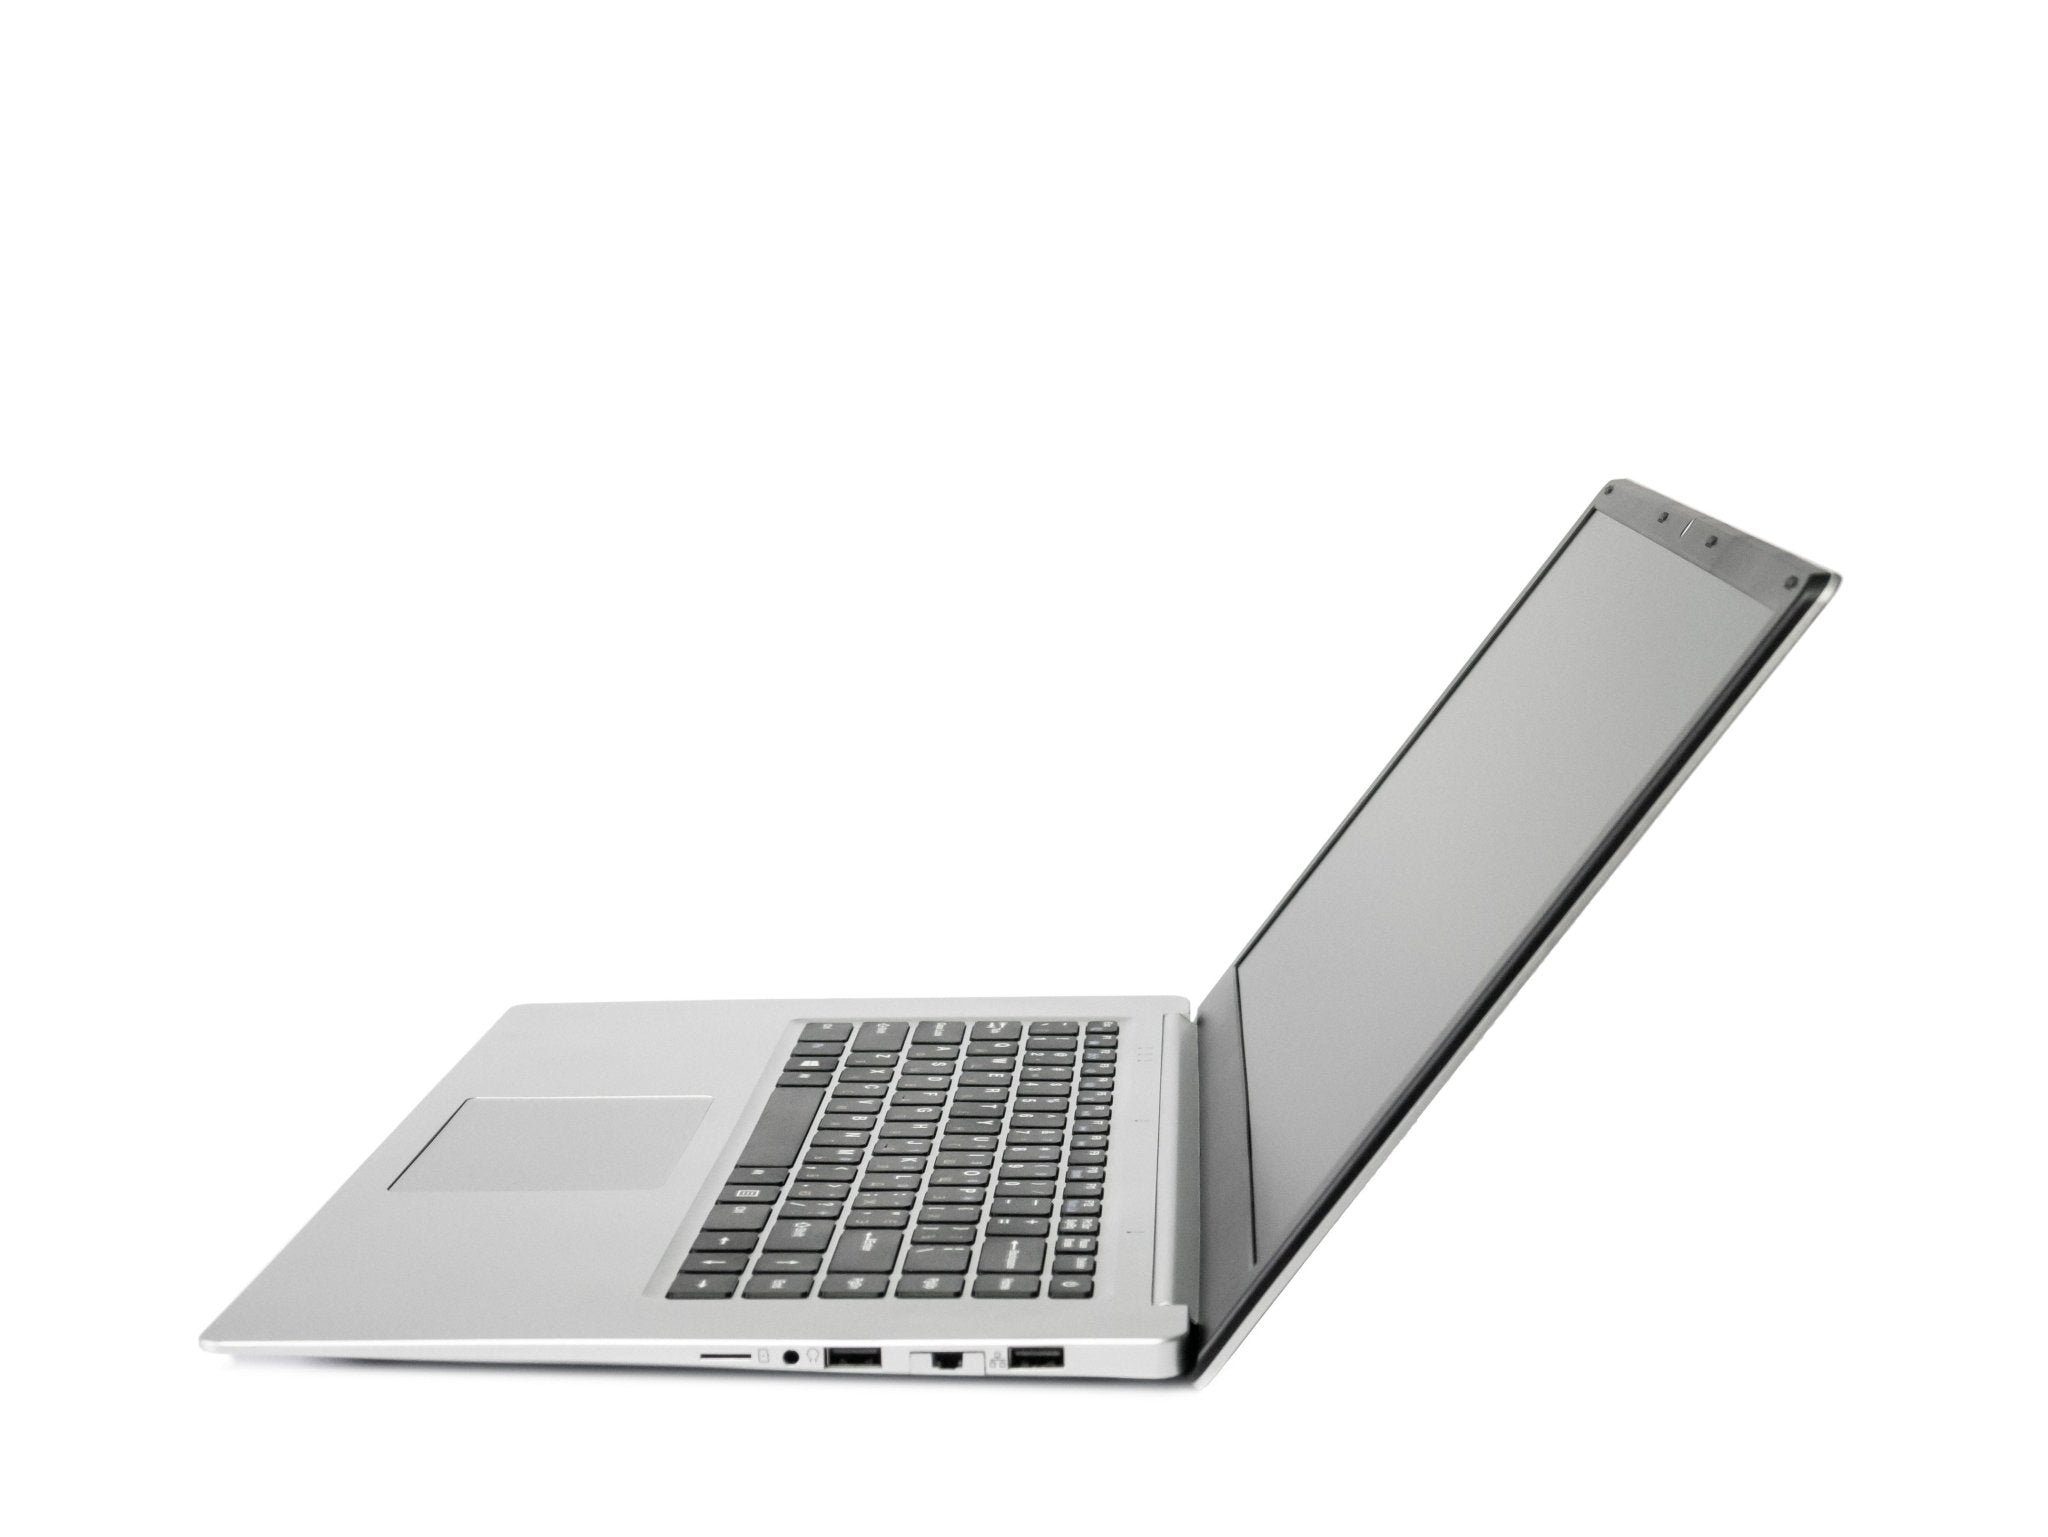 OEM Shenzhen laptop 15.6 inch Win 10 Core i7 Quad Core notebook computer GreatEagleInc